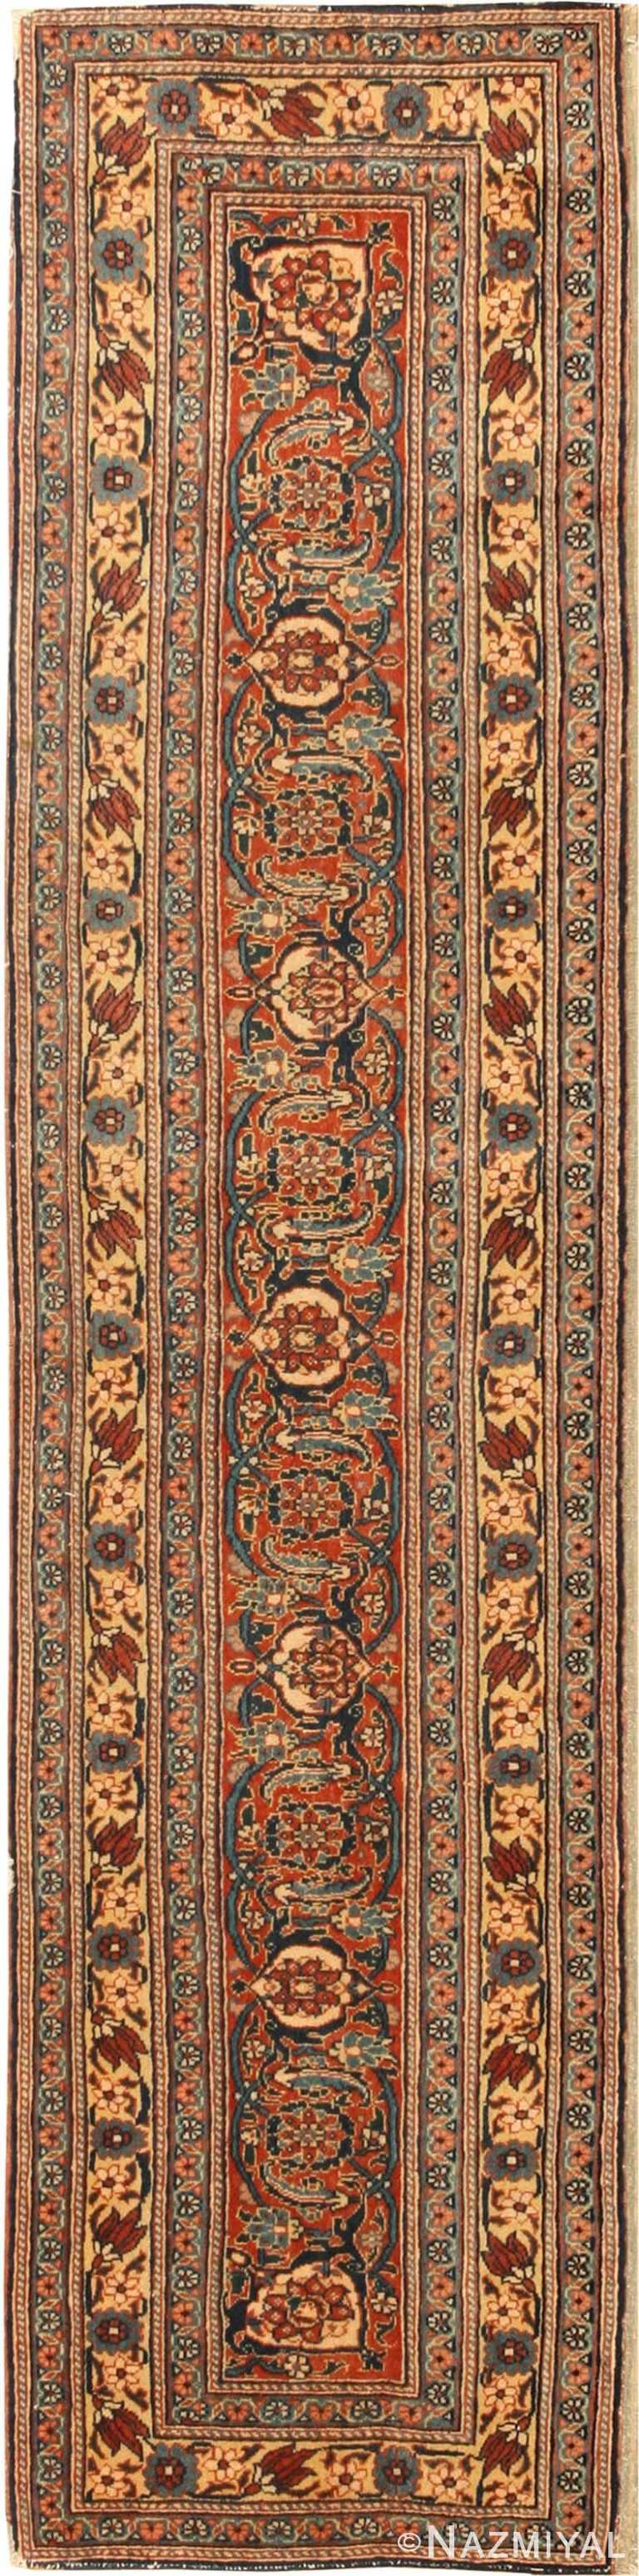 Antique Tabriz Persian Rug 42859 Nazmiyal